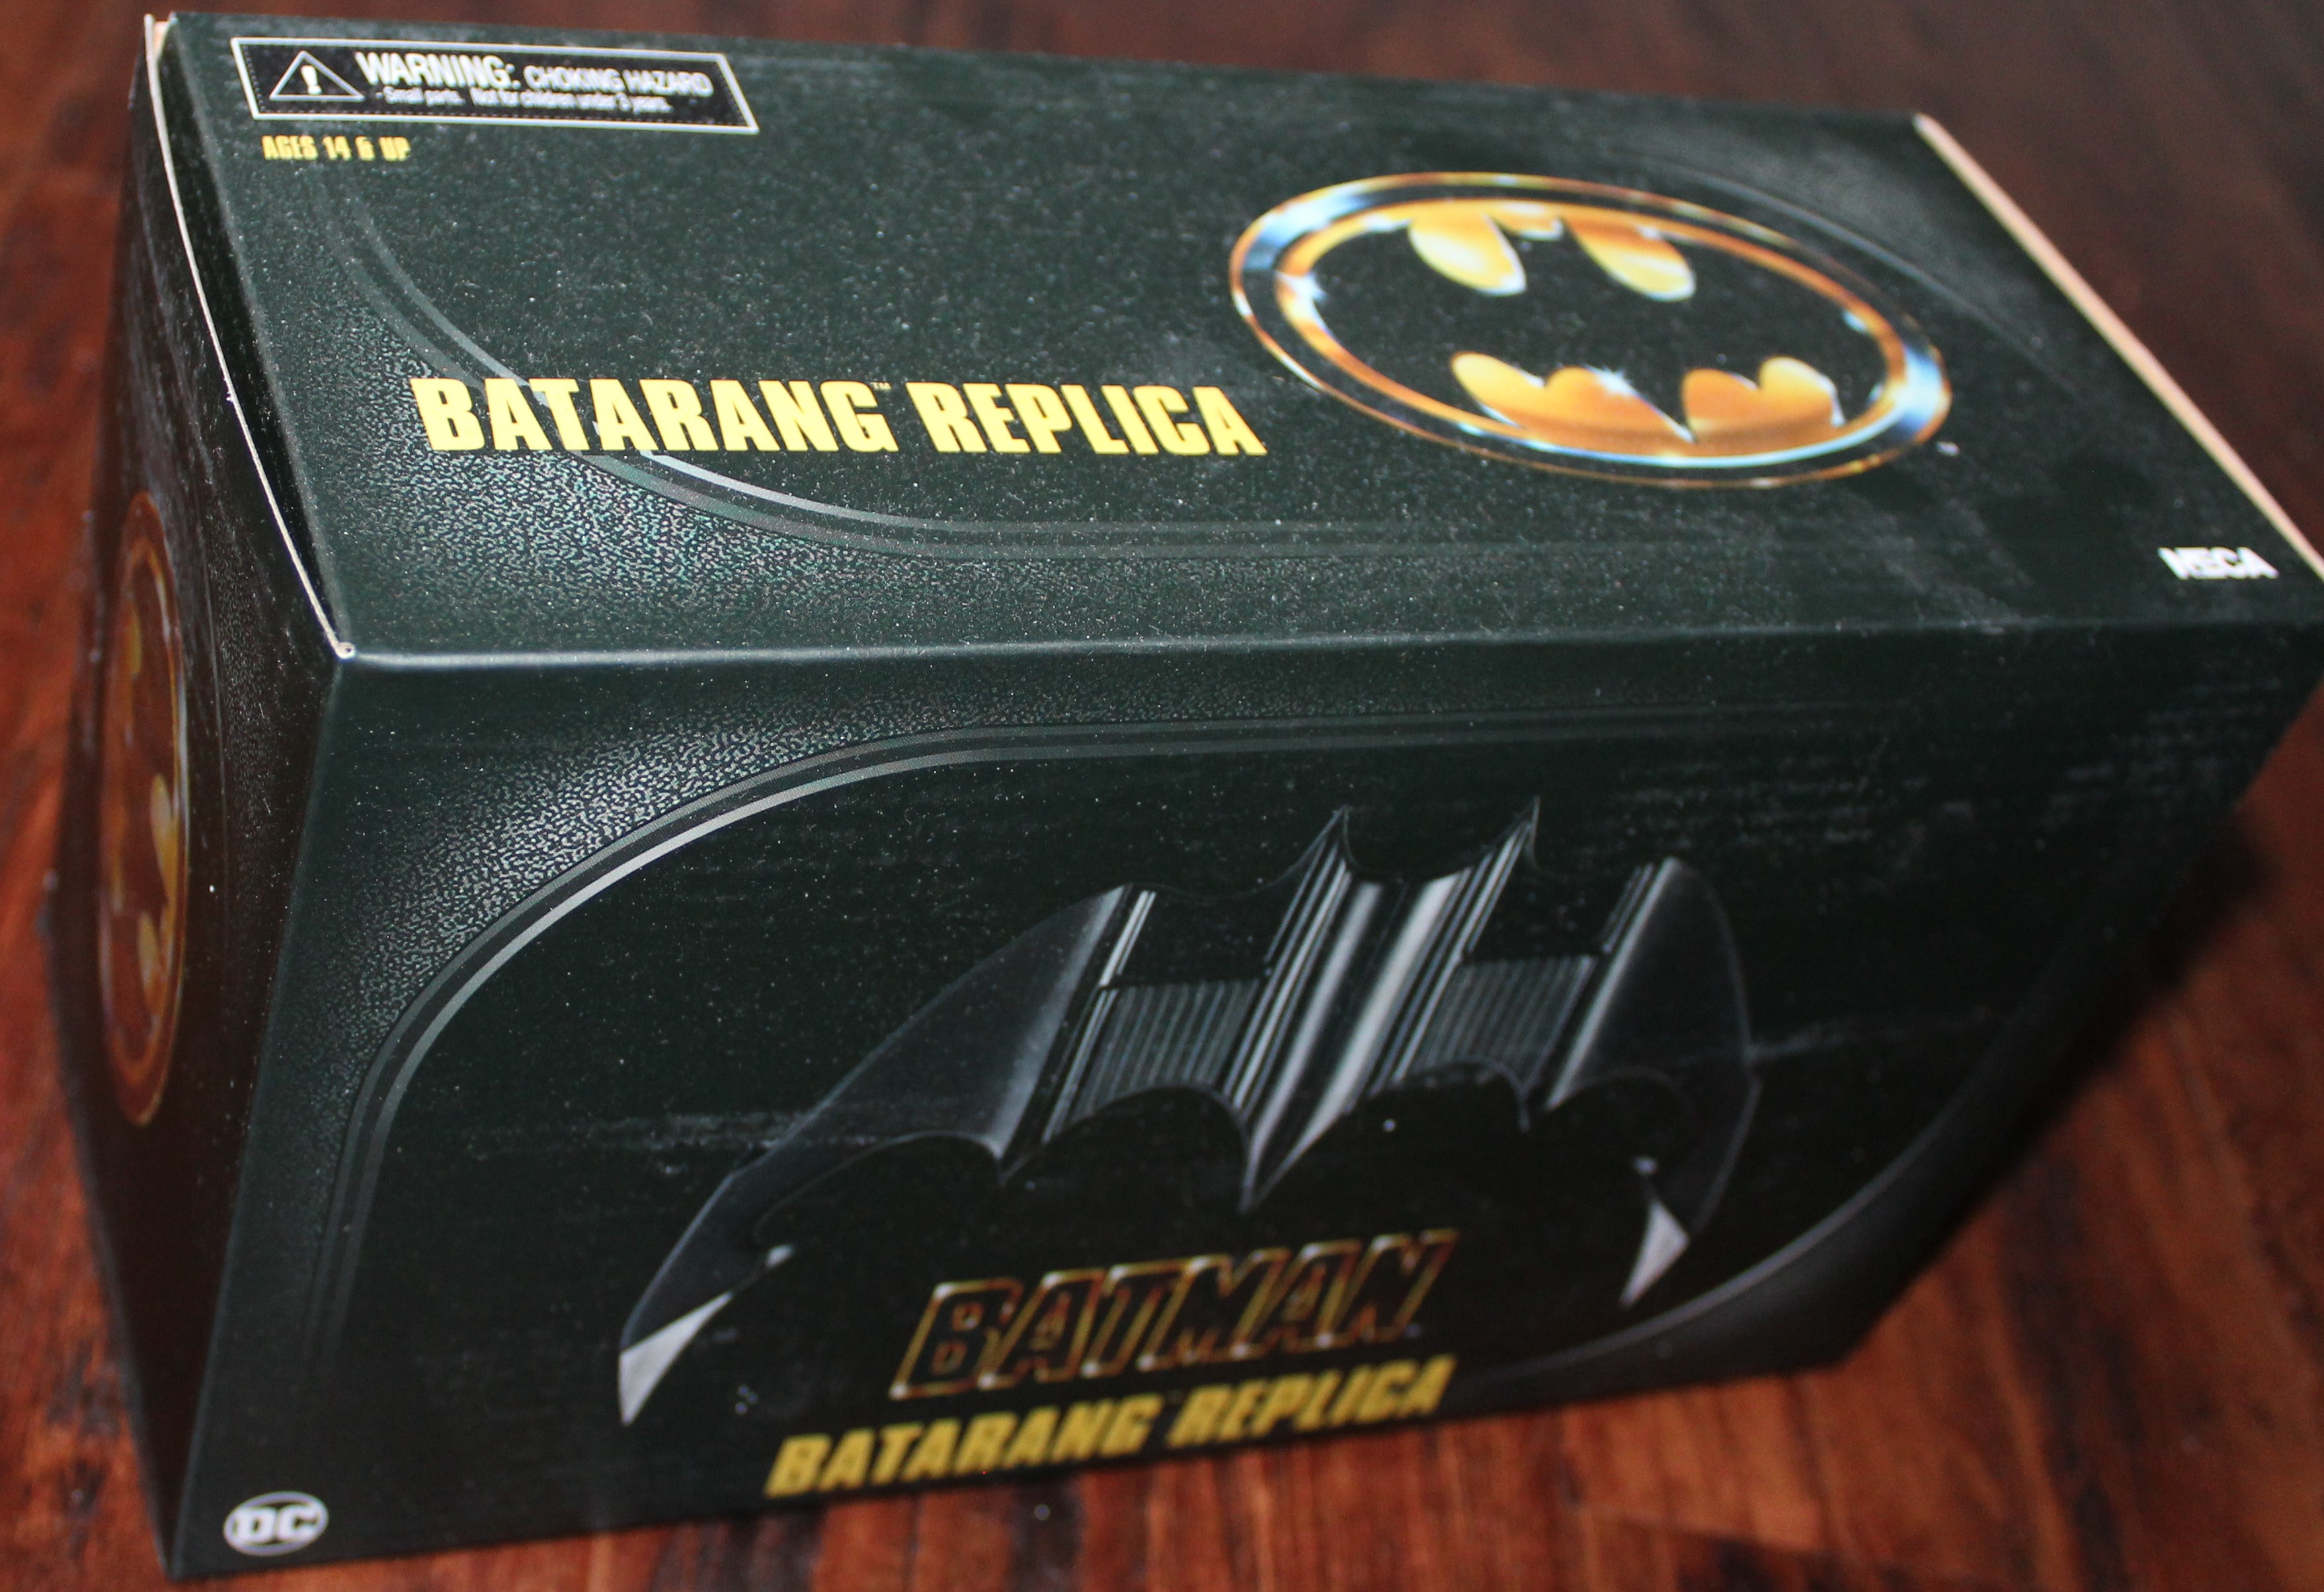 Batarang box